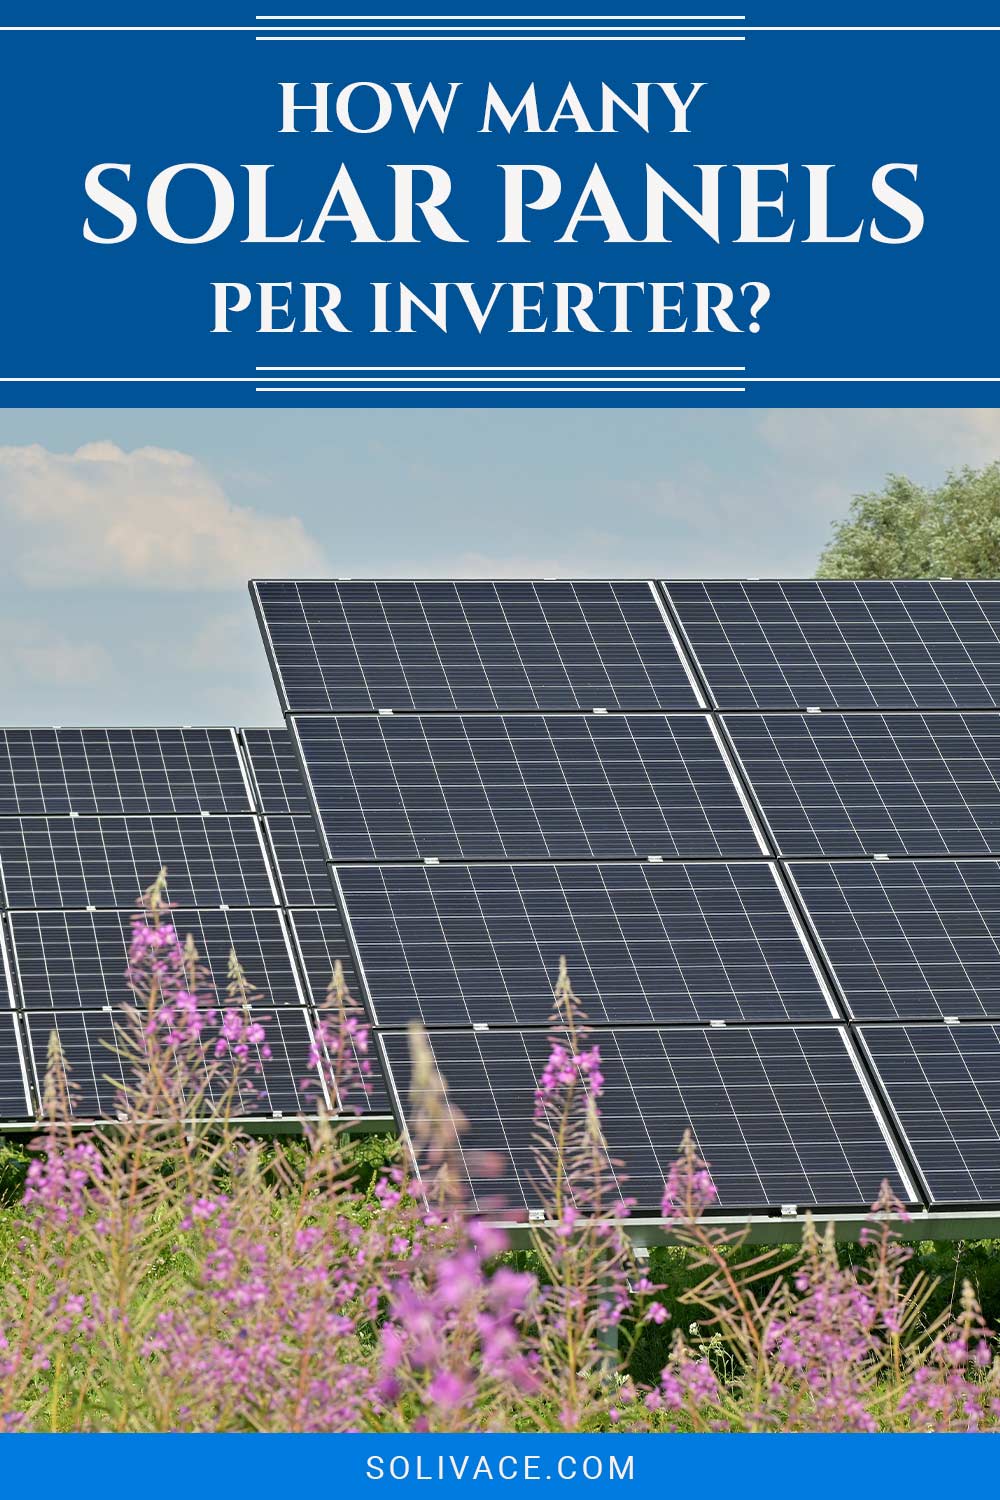 How Many Solar Panels Per Inverter?